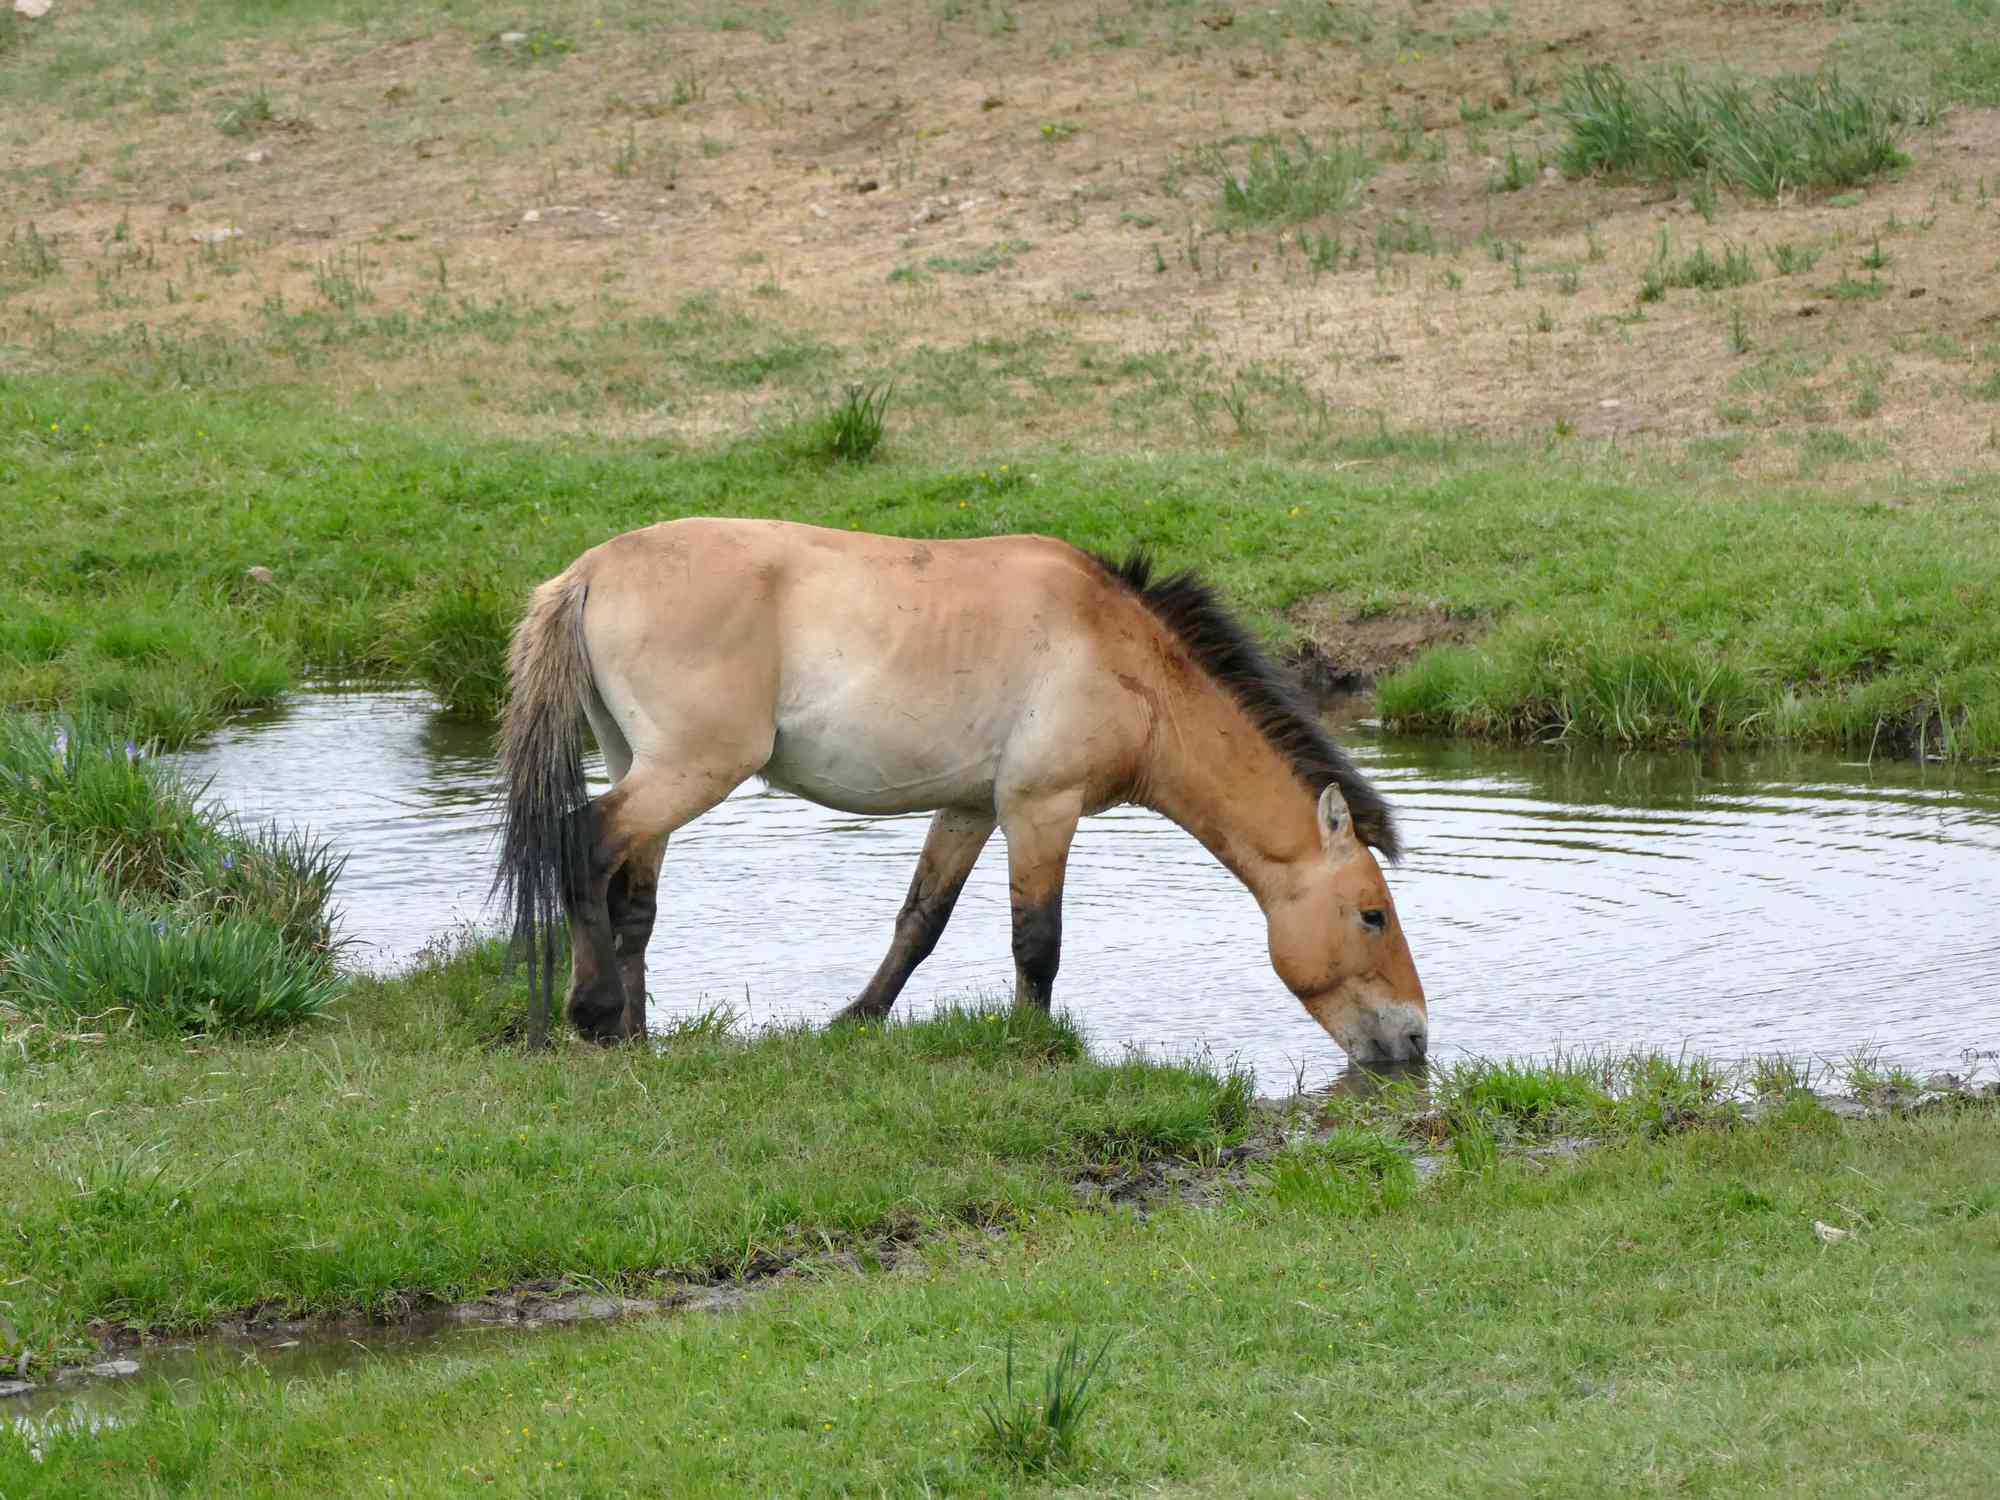 El caballo de Przewalski de color canela claro se agacha para beber agua rodeado de hierba verde